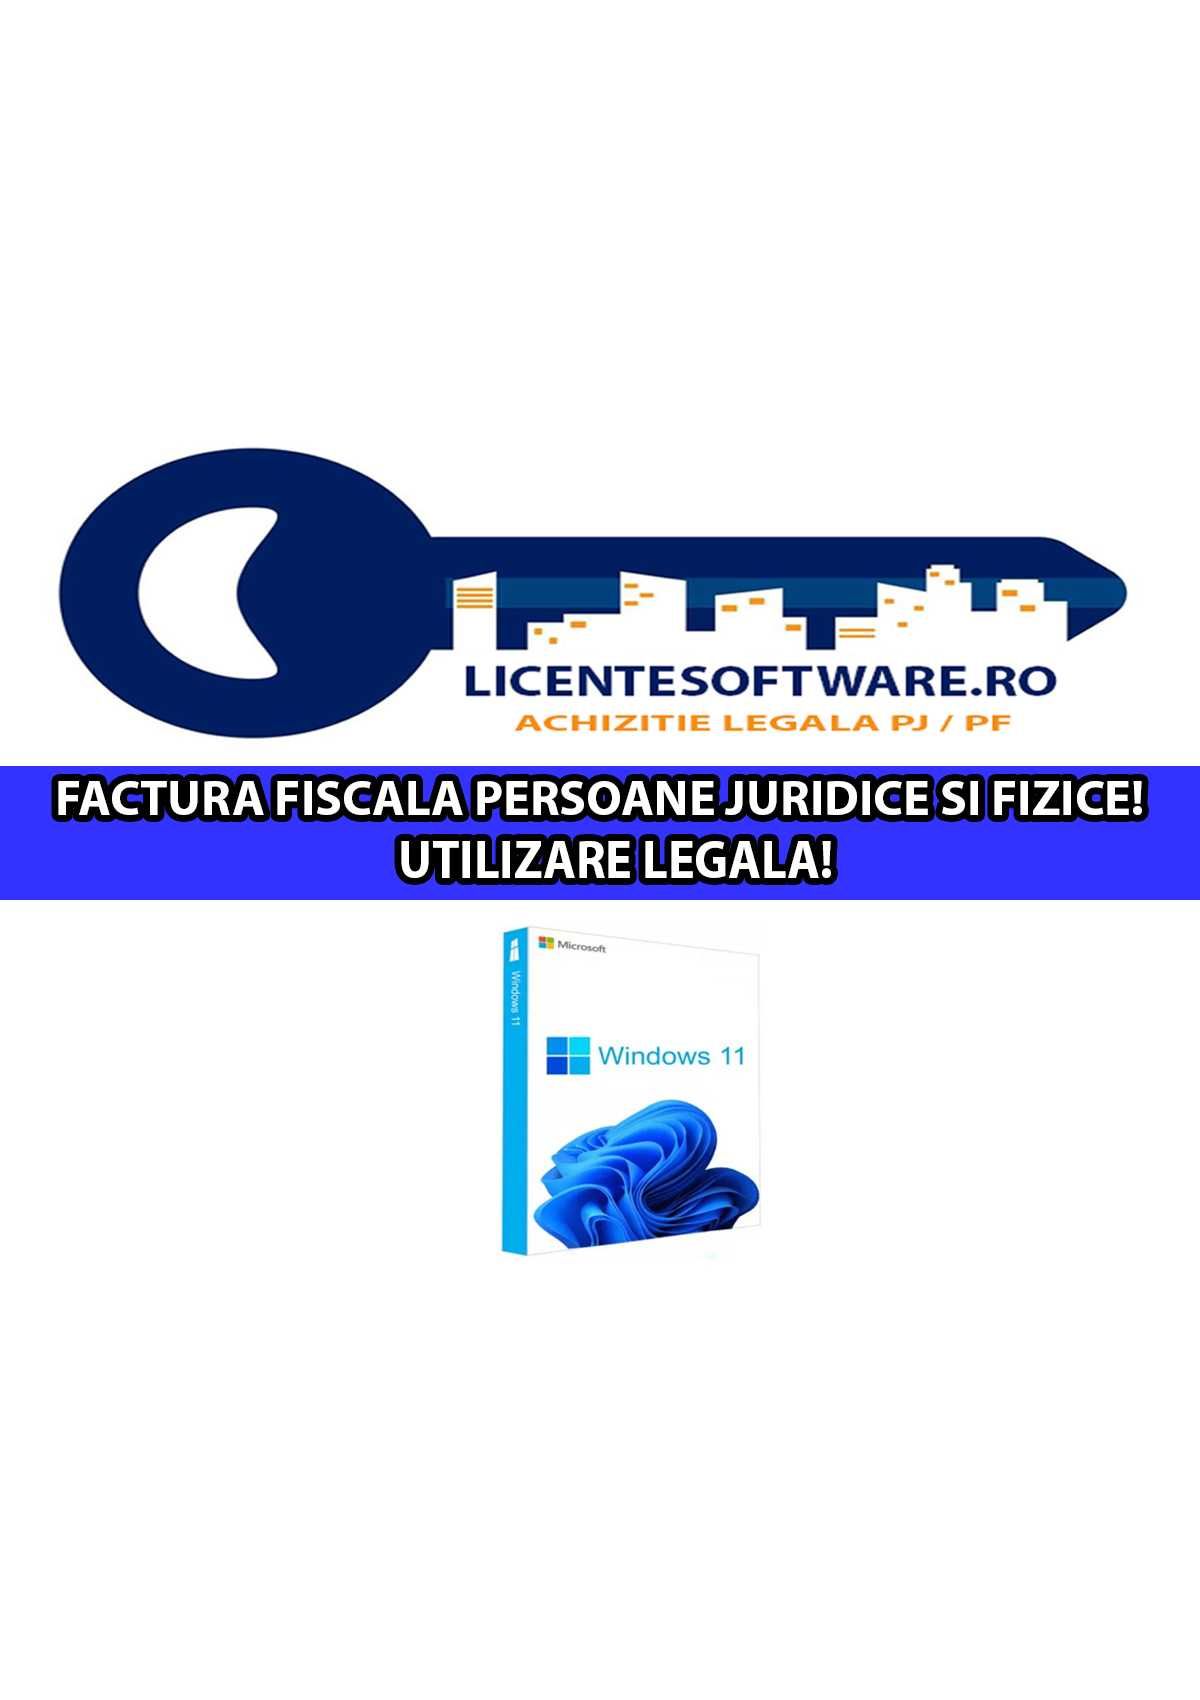 Licente RETAIL: Windows 11 Professional & Home - Factura Firme & PF!